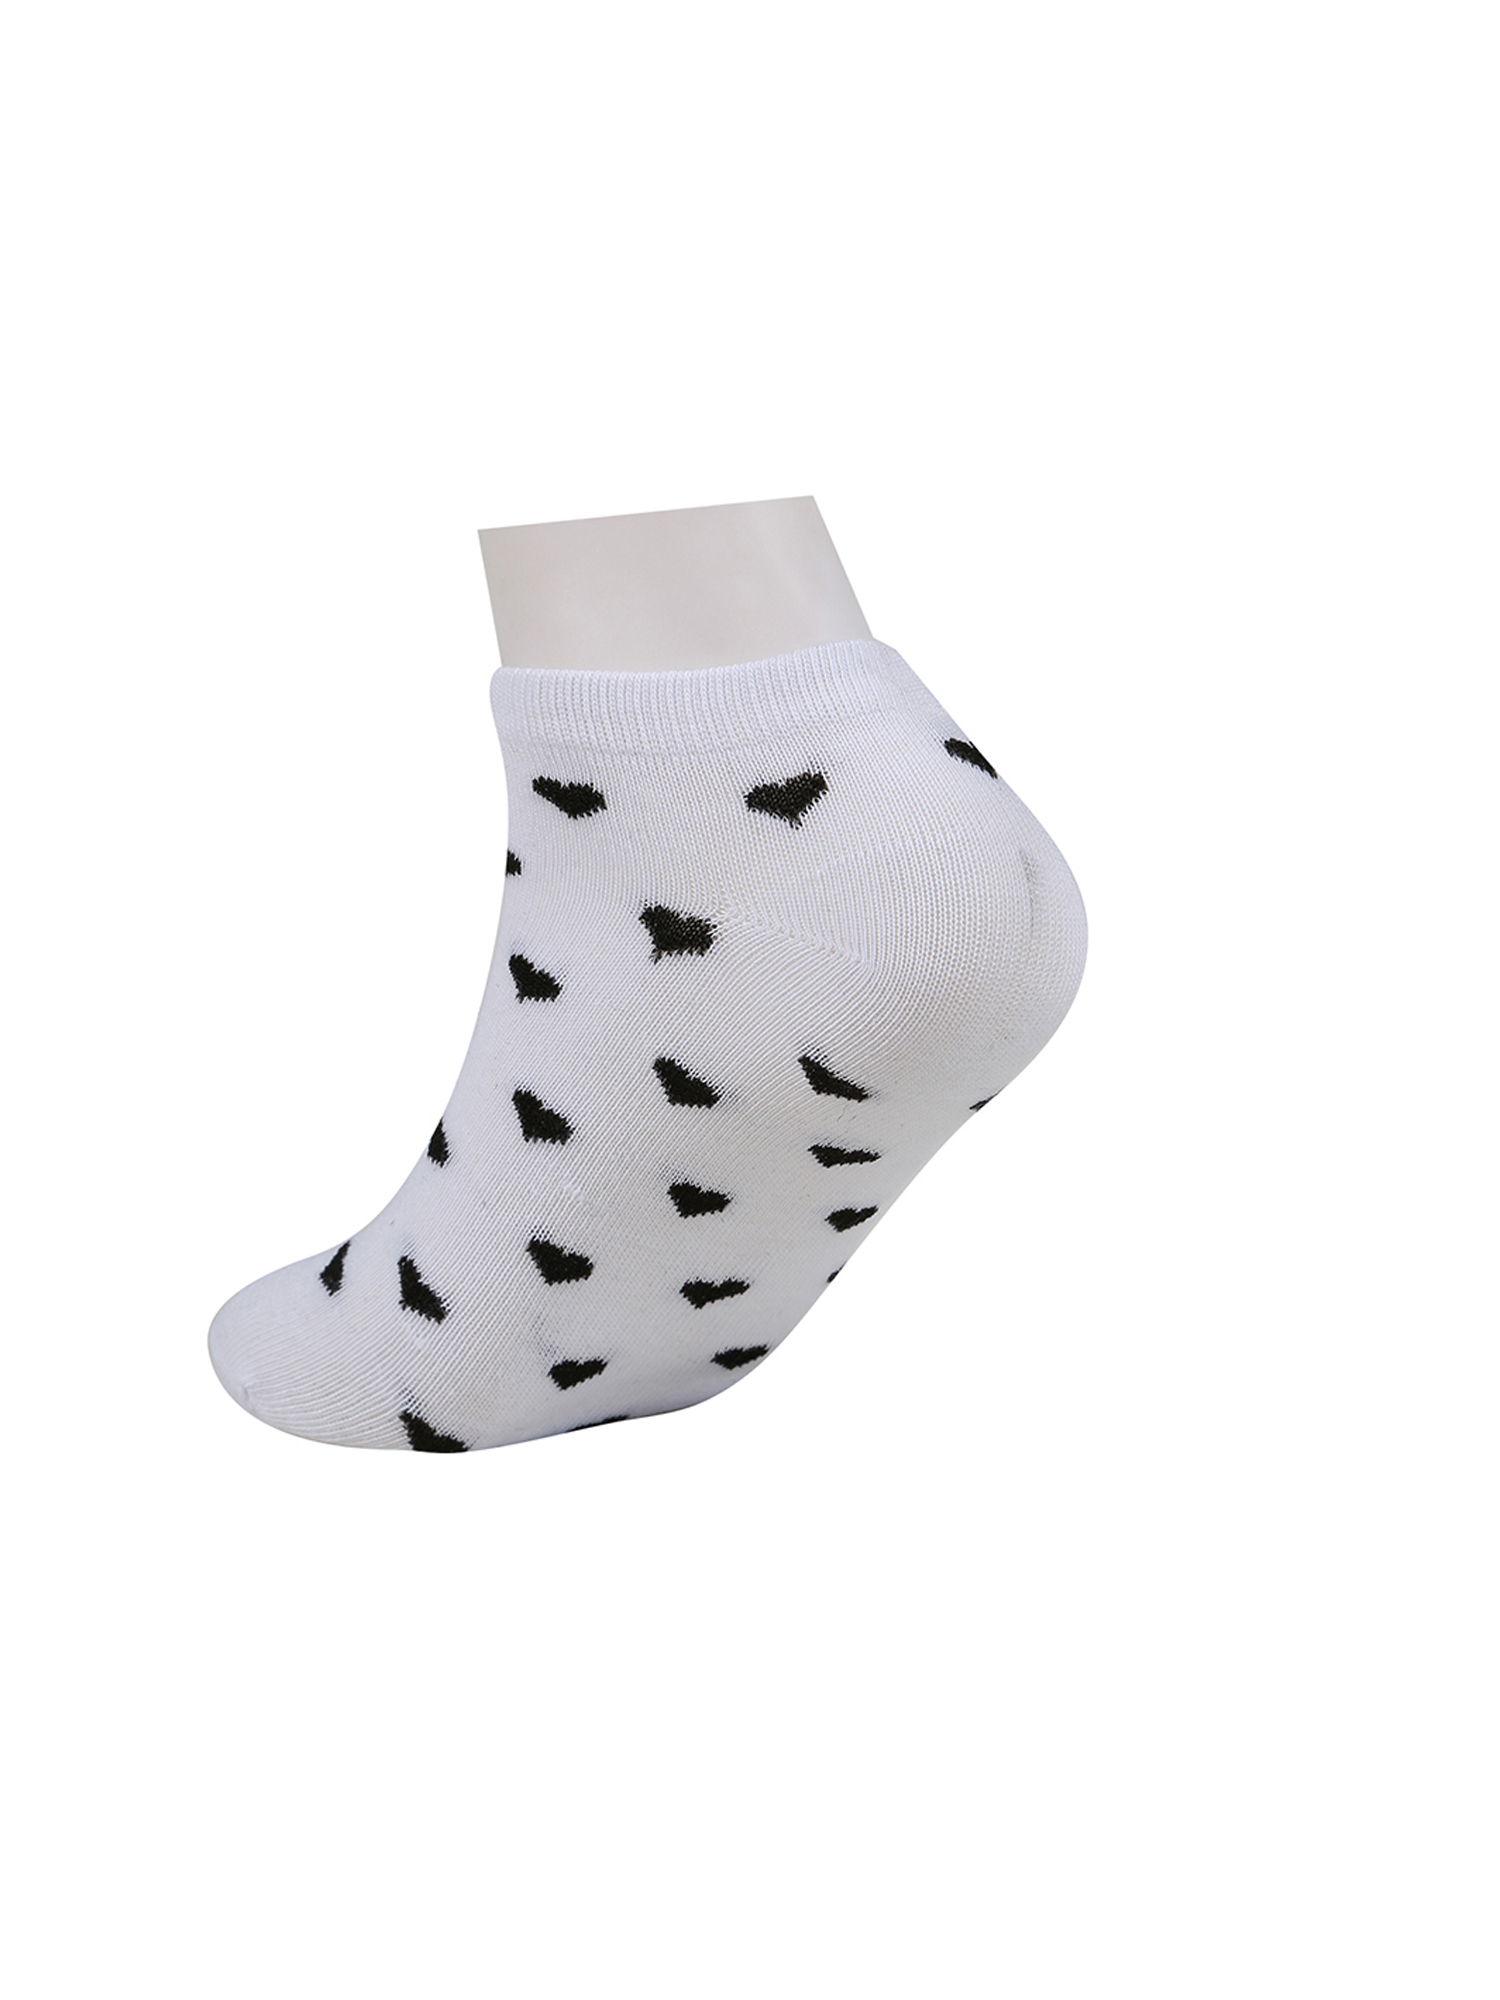 Allegra K Women's Ankle High Elastic Cuff Low Cut Athletic Socks - image 4 of 6